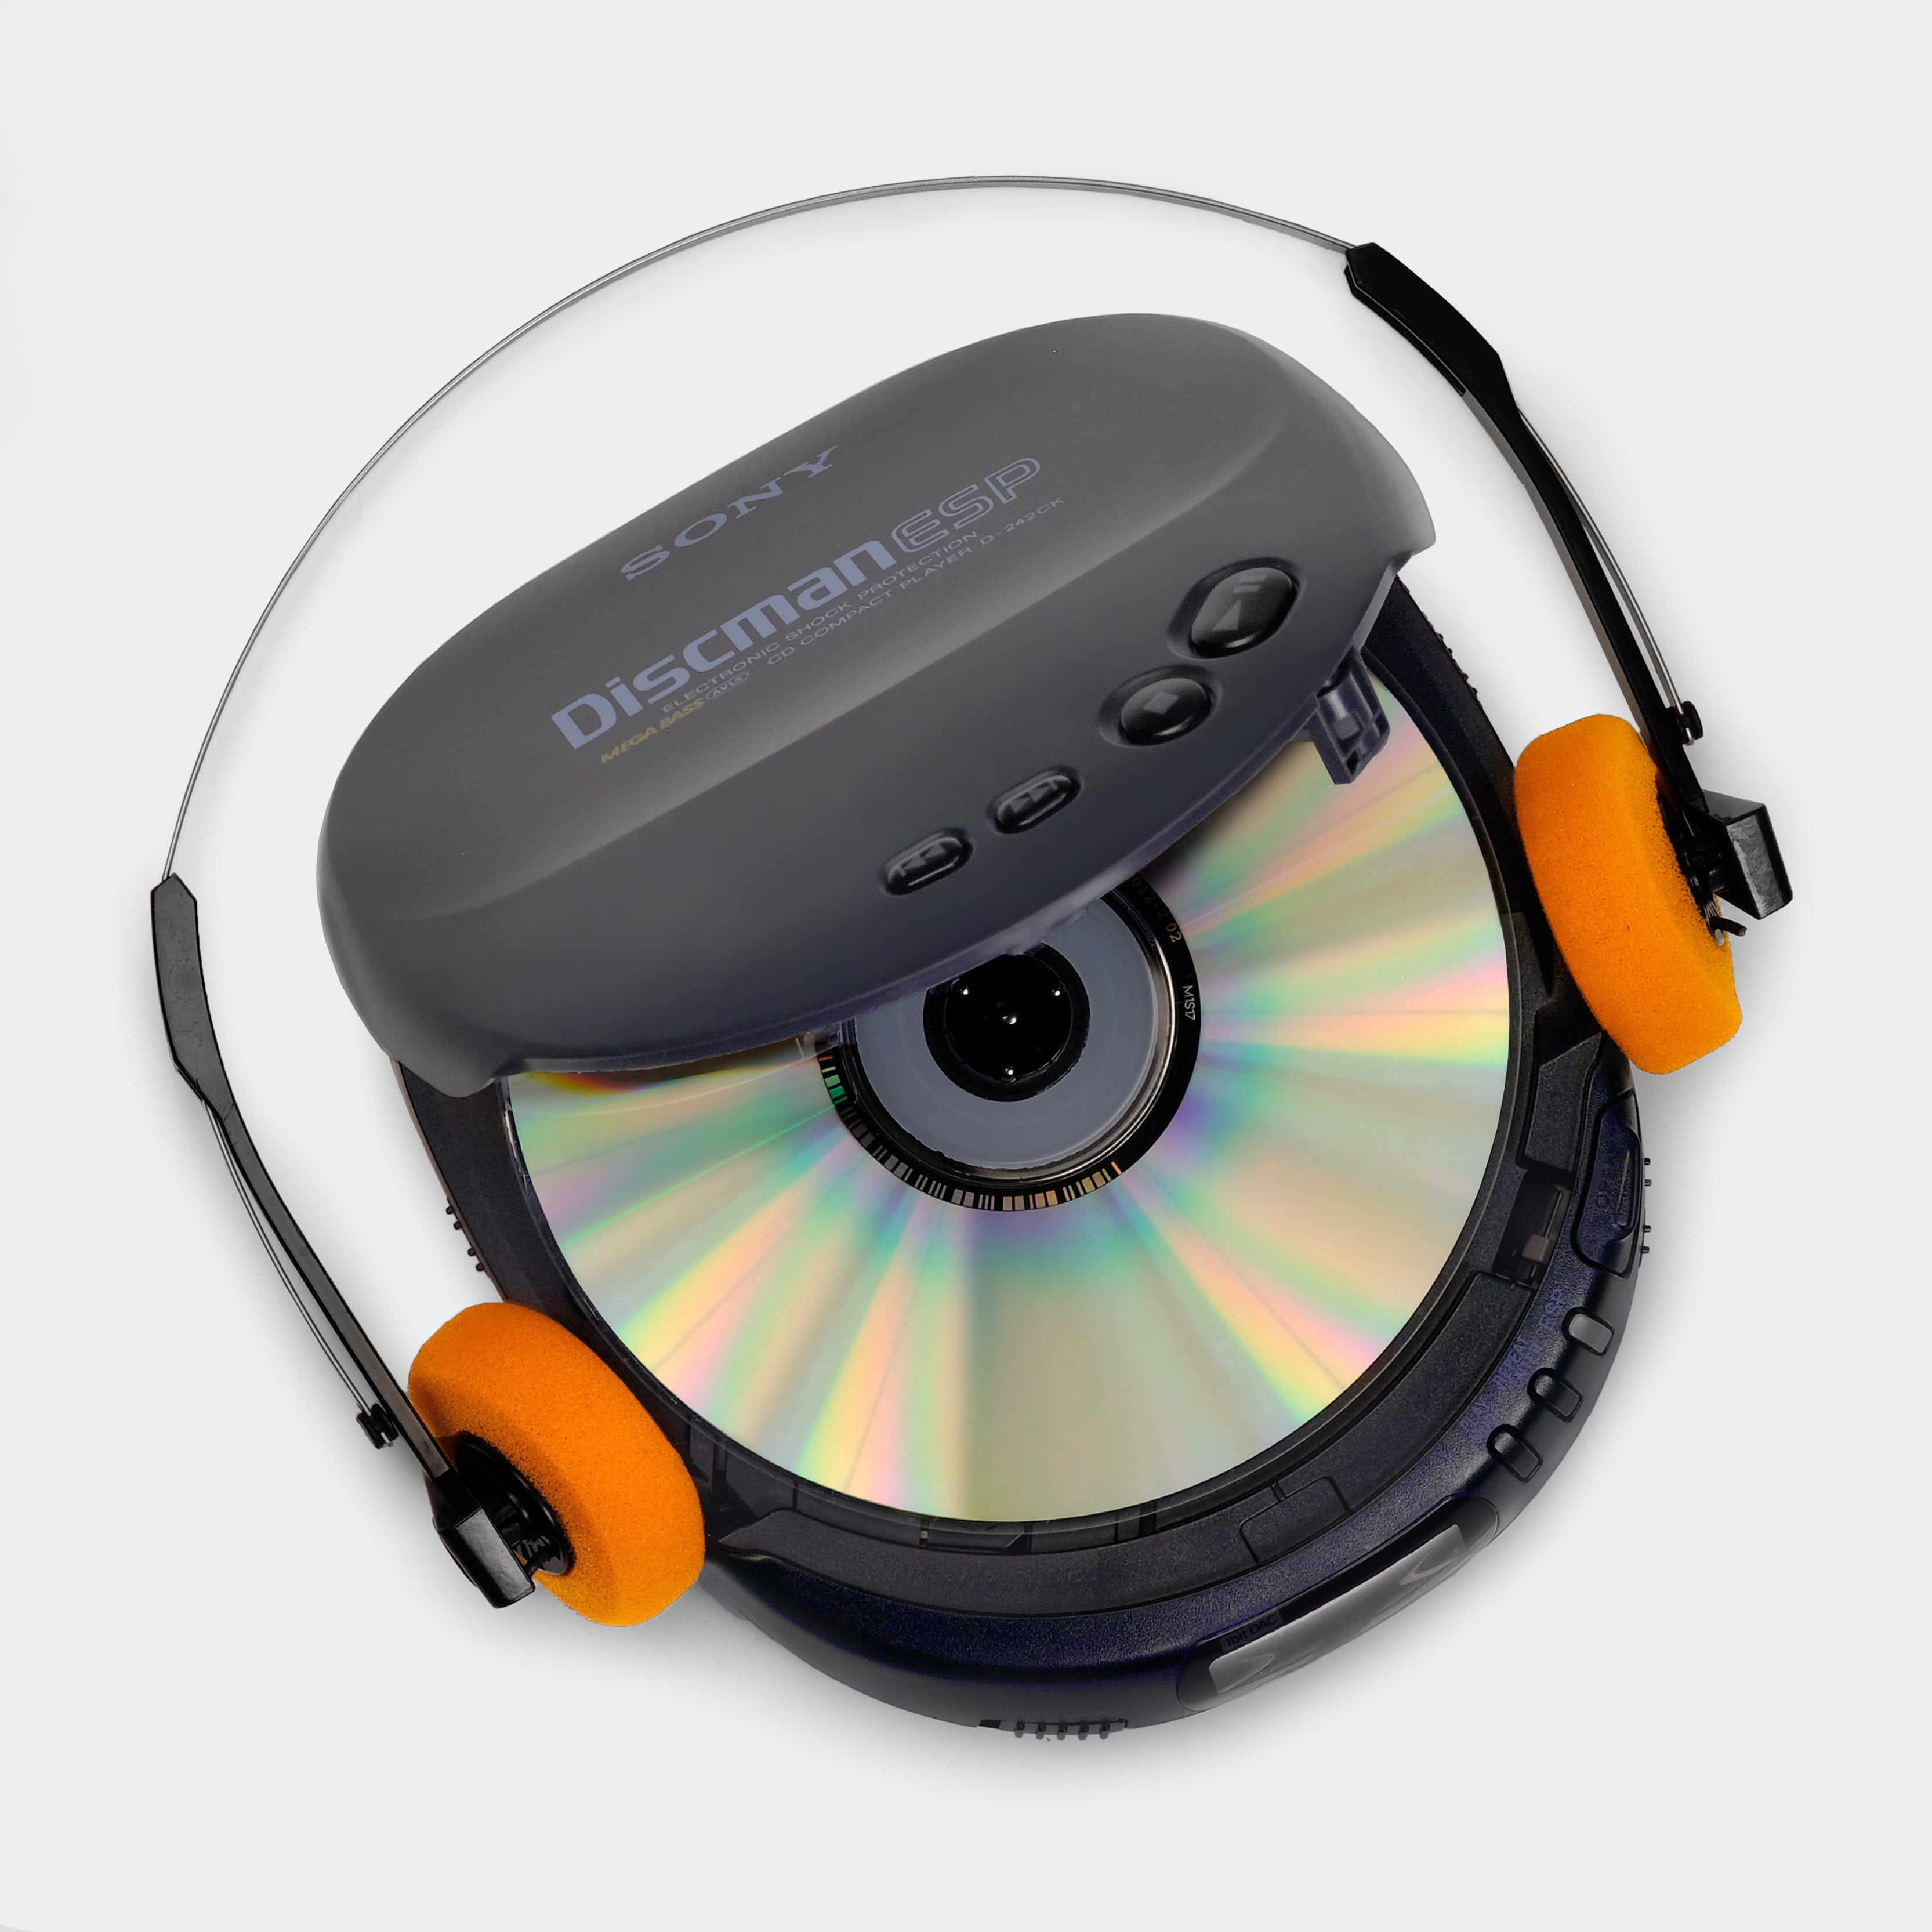 Sony Discman D-242CK Portable CD Player